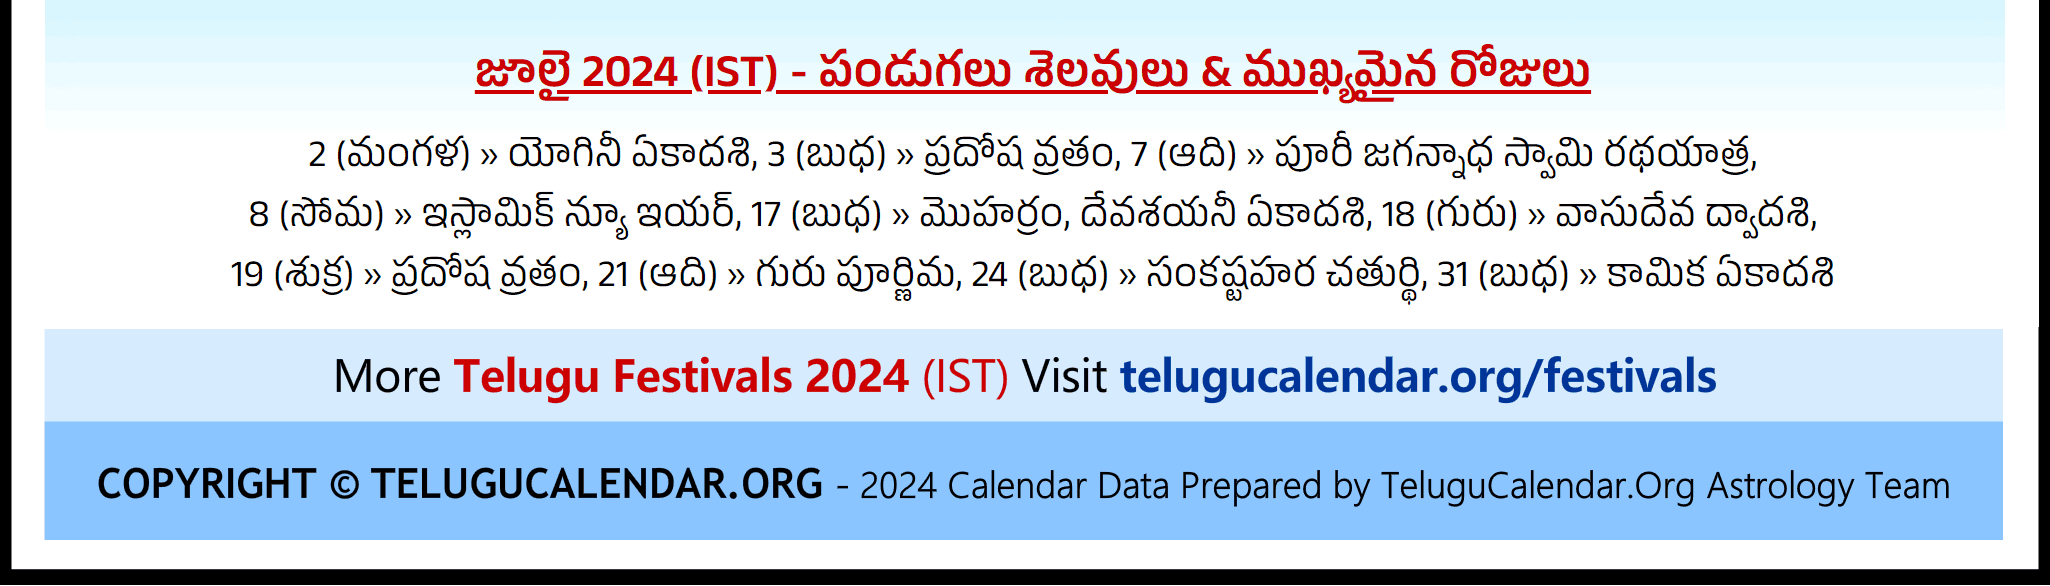 Telugu Festivals (IST) 2024 July